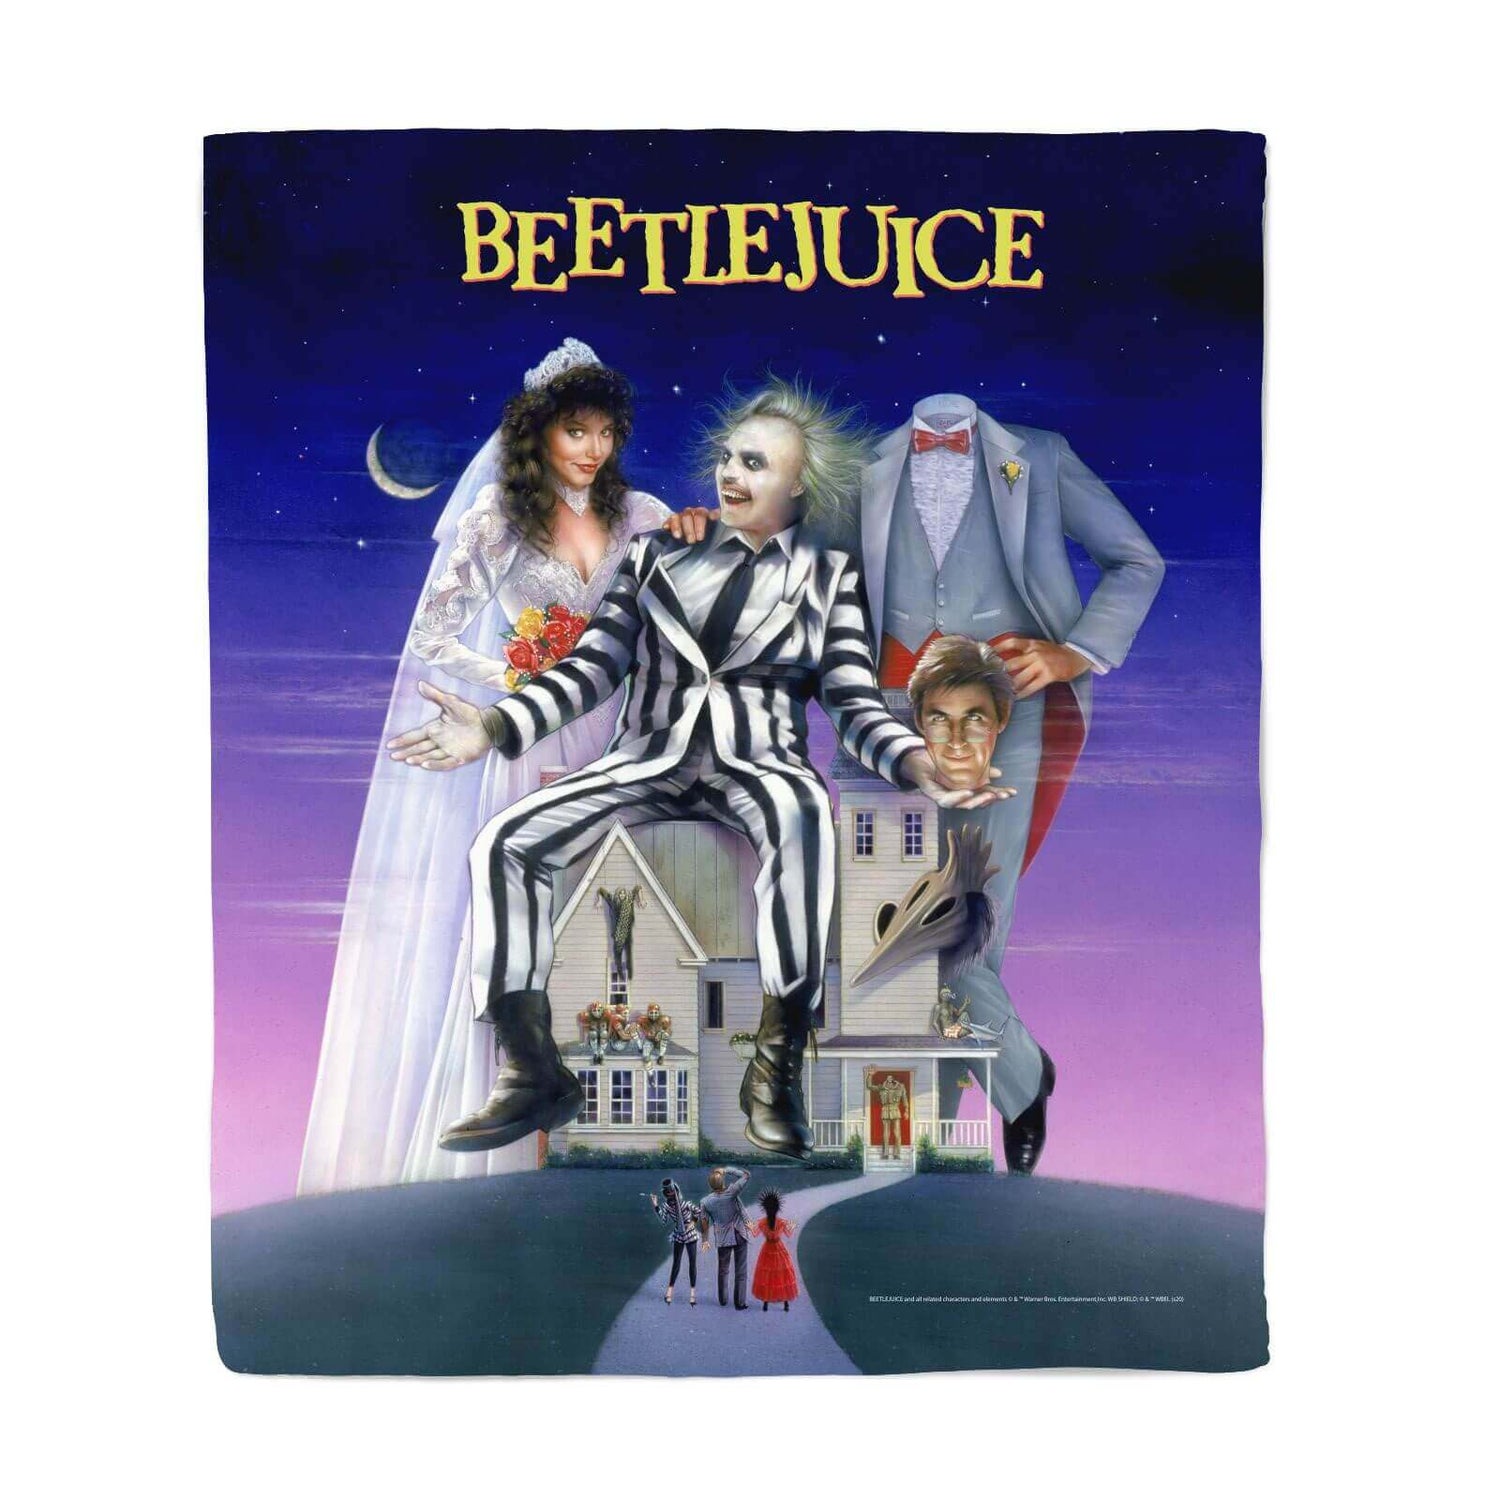 Beetlejuice Poster Fleece Blanket - Large (150cm x 200cm)